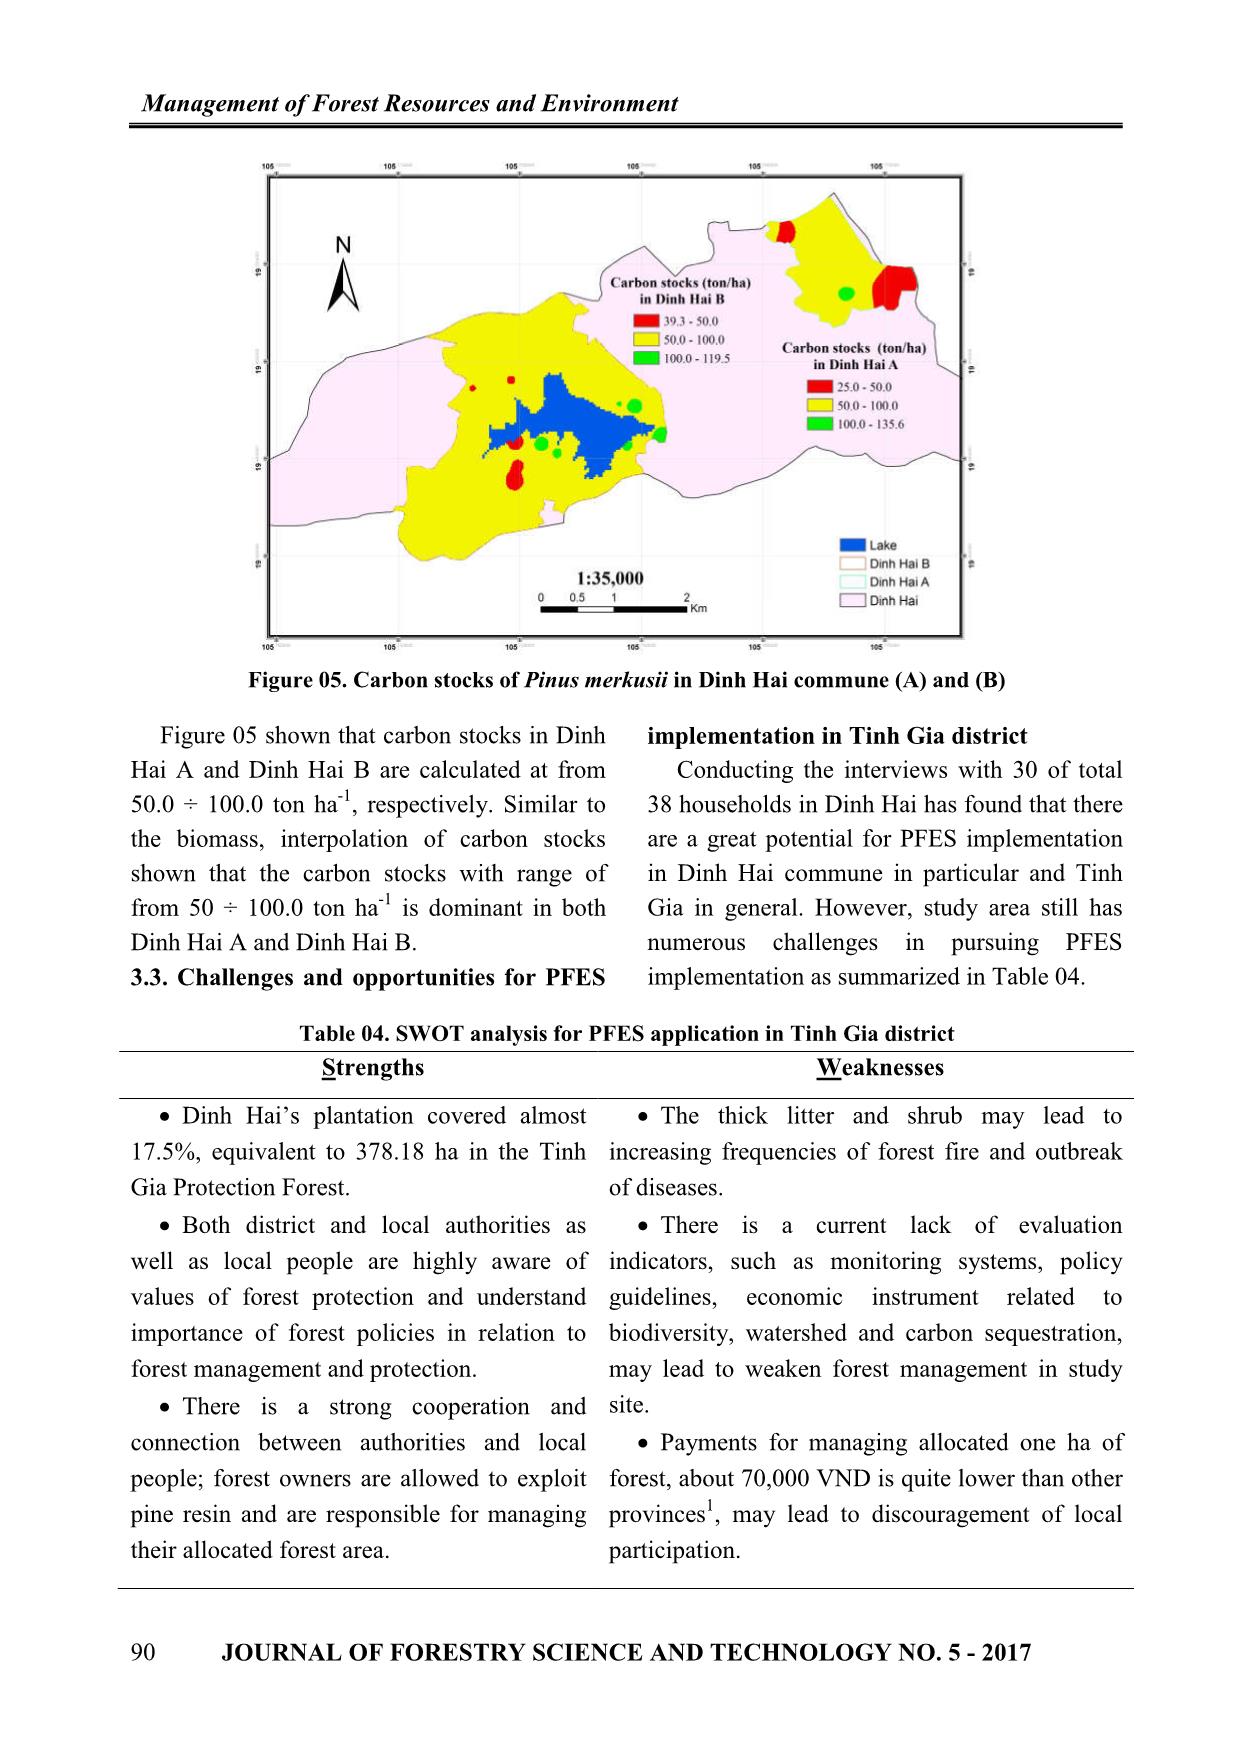 Using spot 6 to estimate biomass and carbon stocks of pinus merkusii plantation in Dinh Hai commune, Thanh Hoa province trang 7